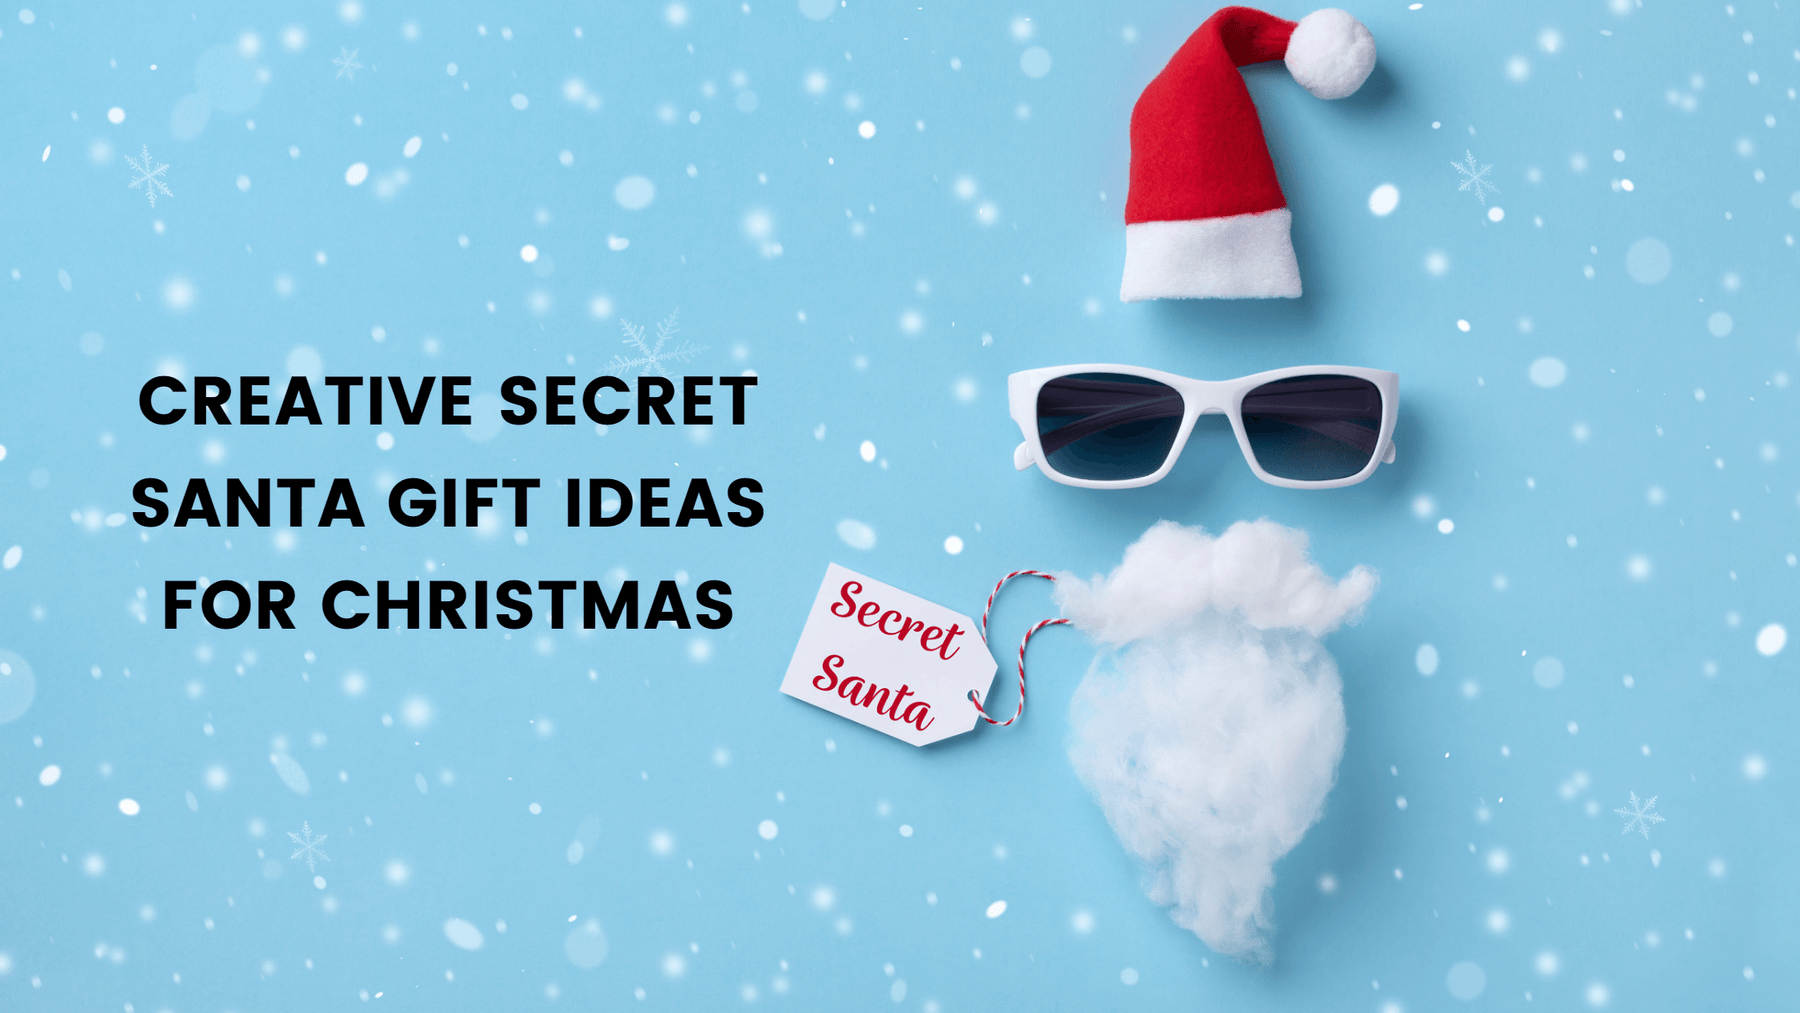 Creative Secret Santa Gift Ideas for Christmas